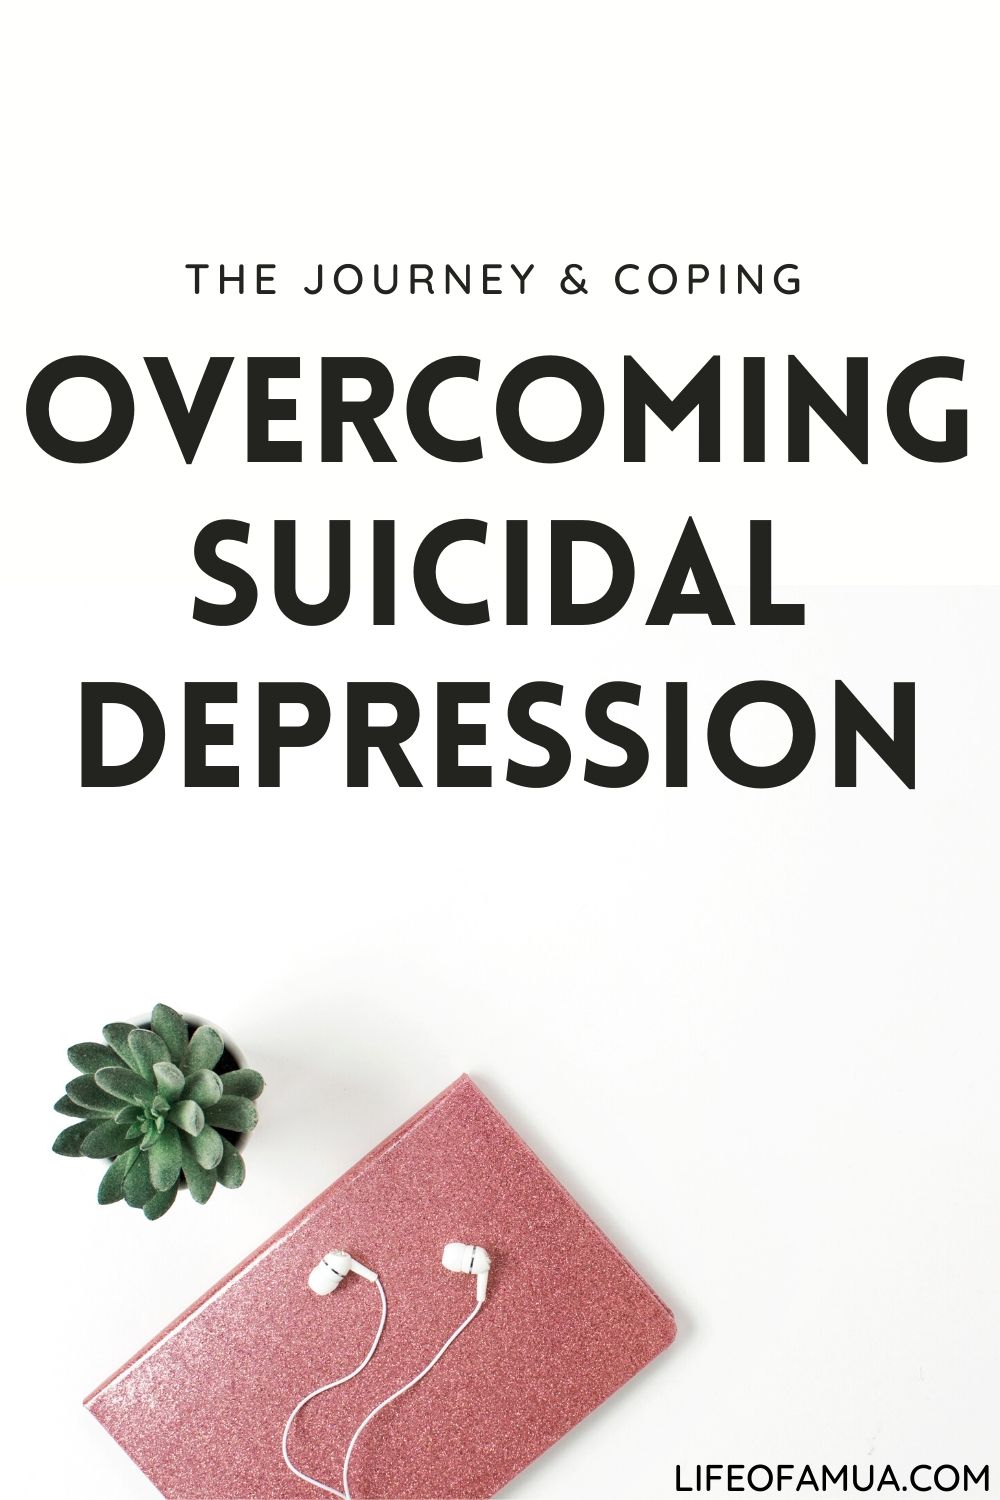 Overcoming suicidal depression